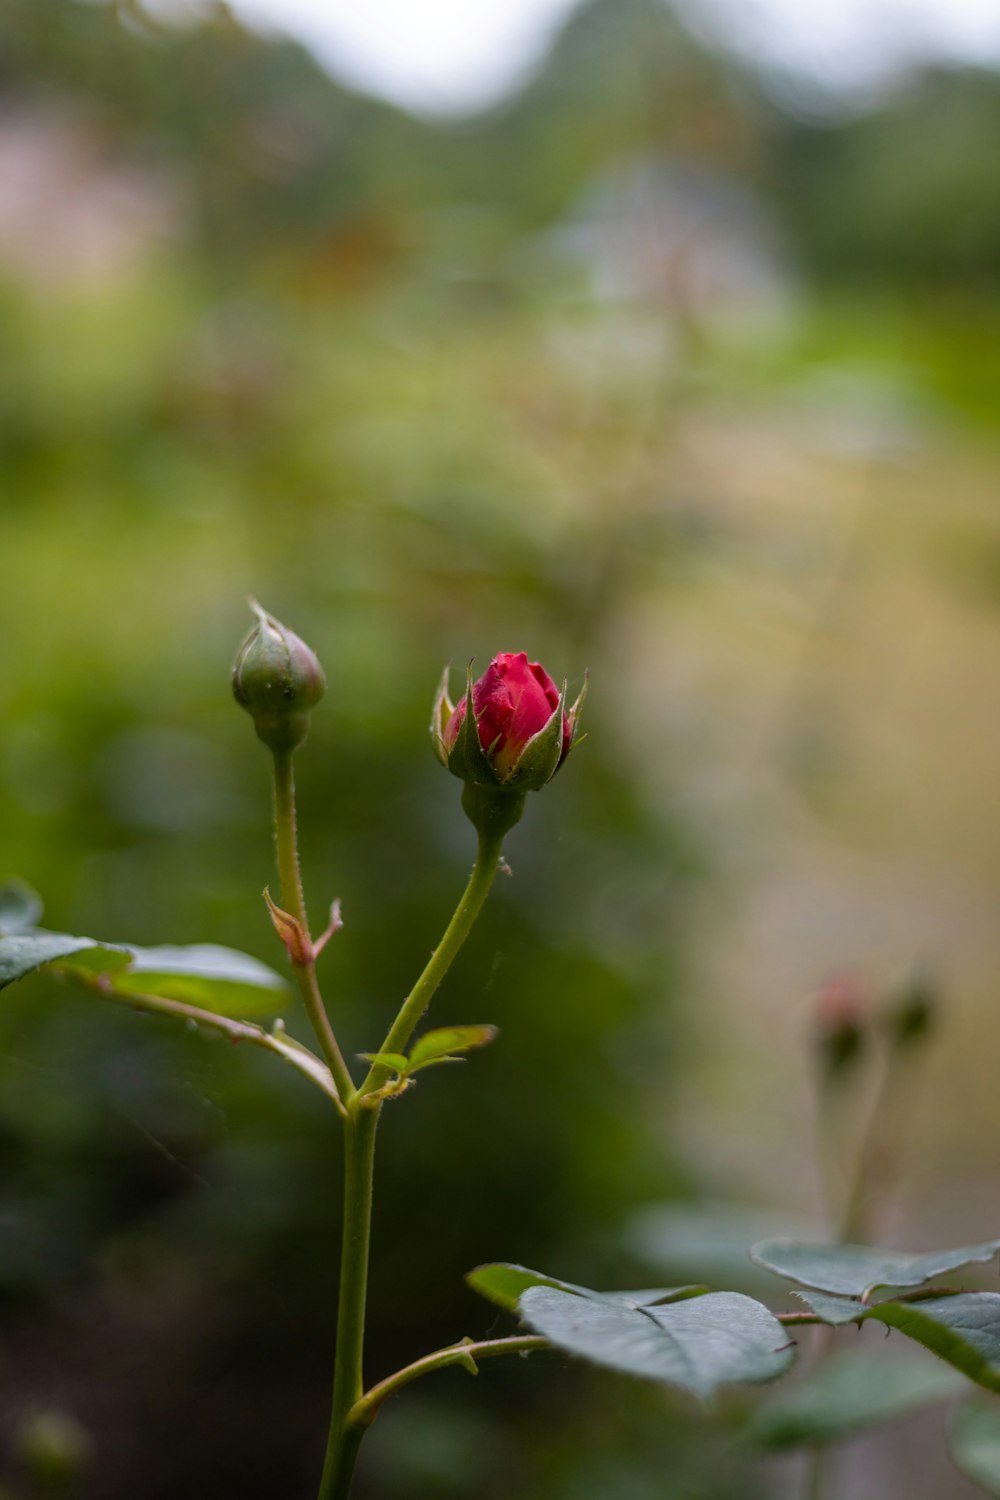 un capullo de flor rojo en un tallo verde